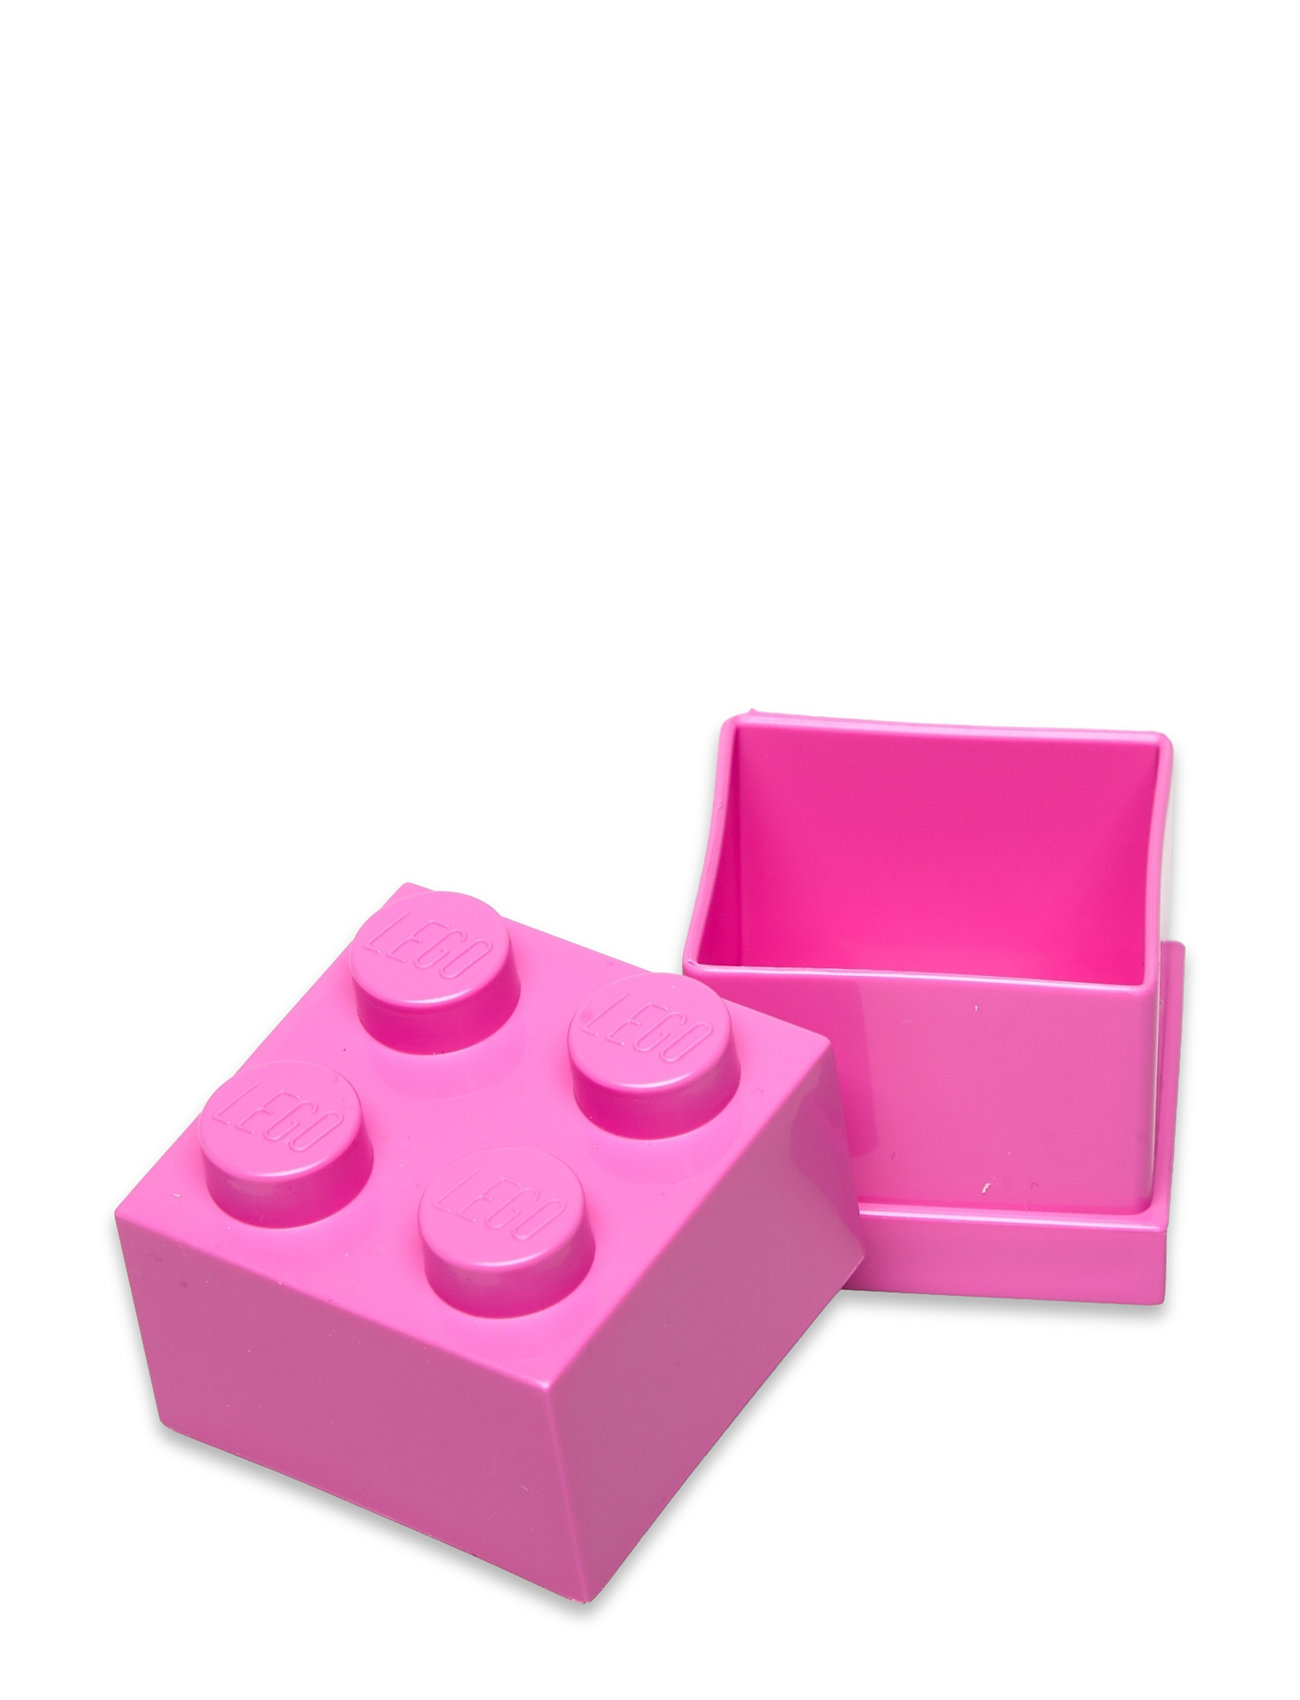 Lego Mini Box 4 Home Kids Decor Storage Storage Boxes Pink LEGO STORAGE